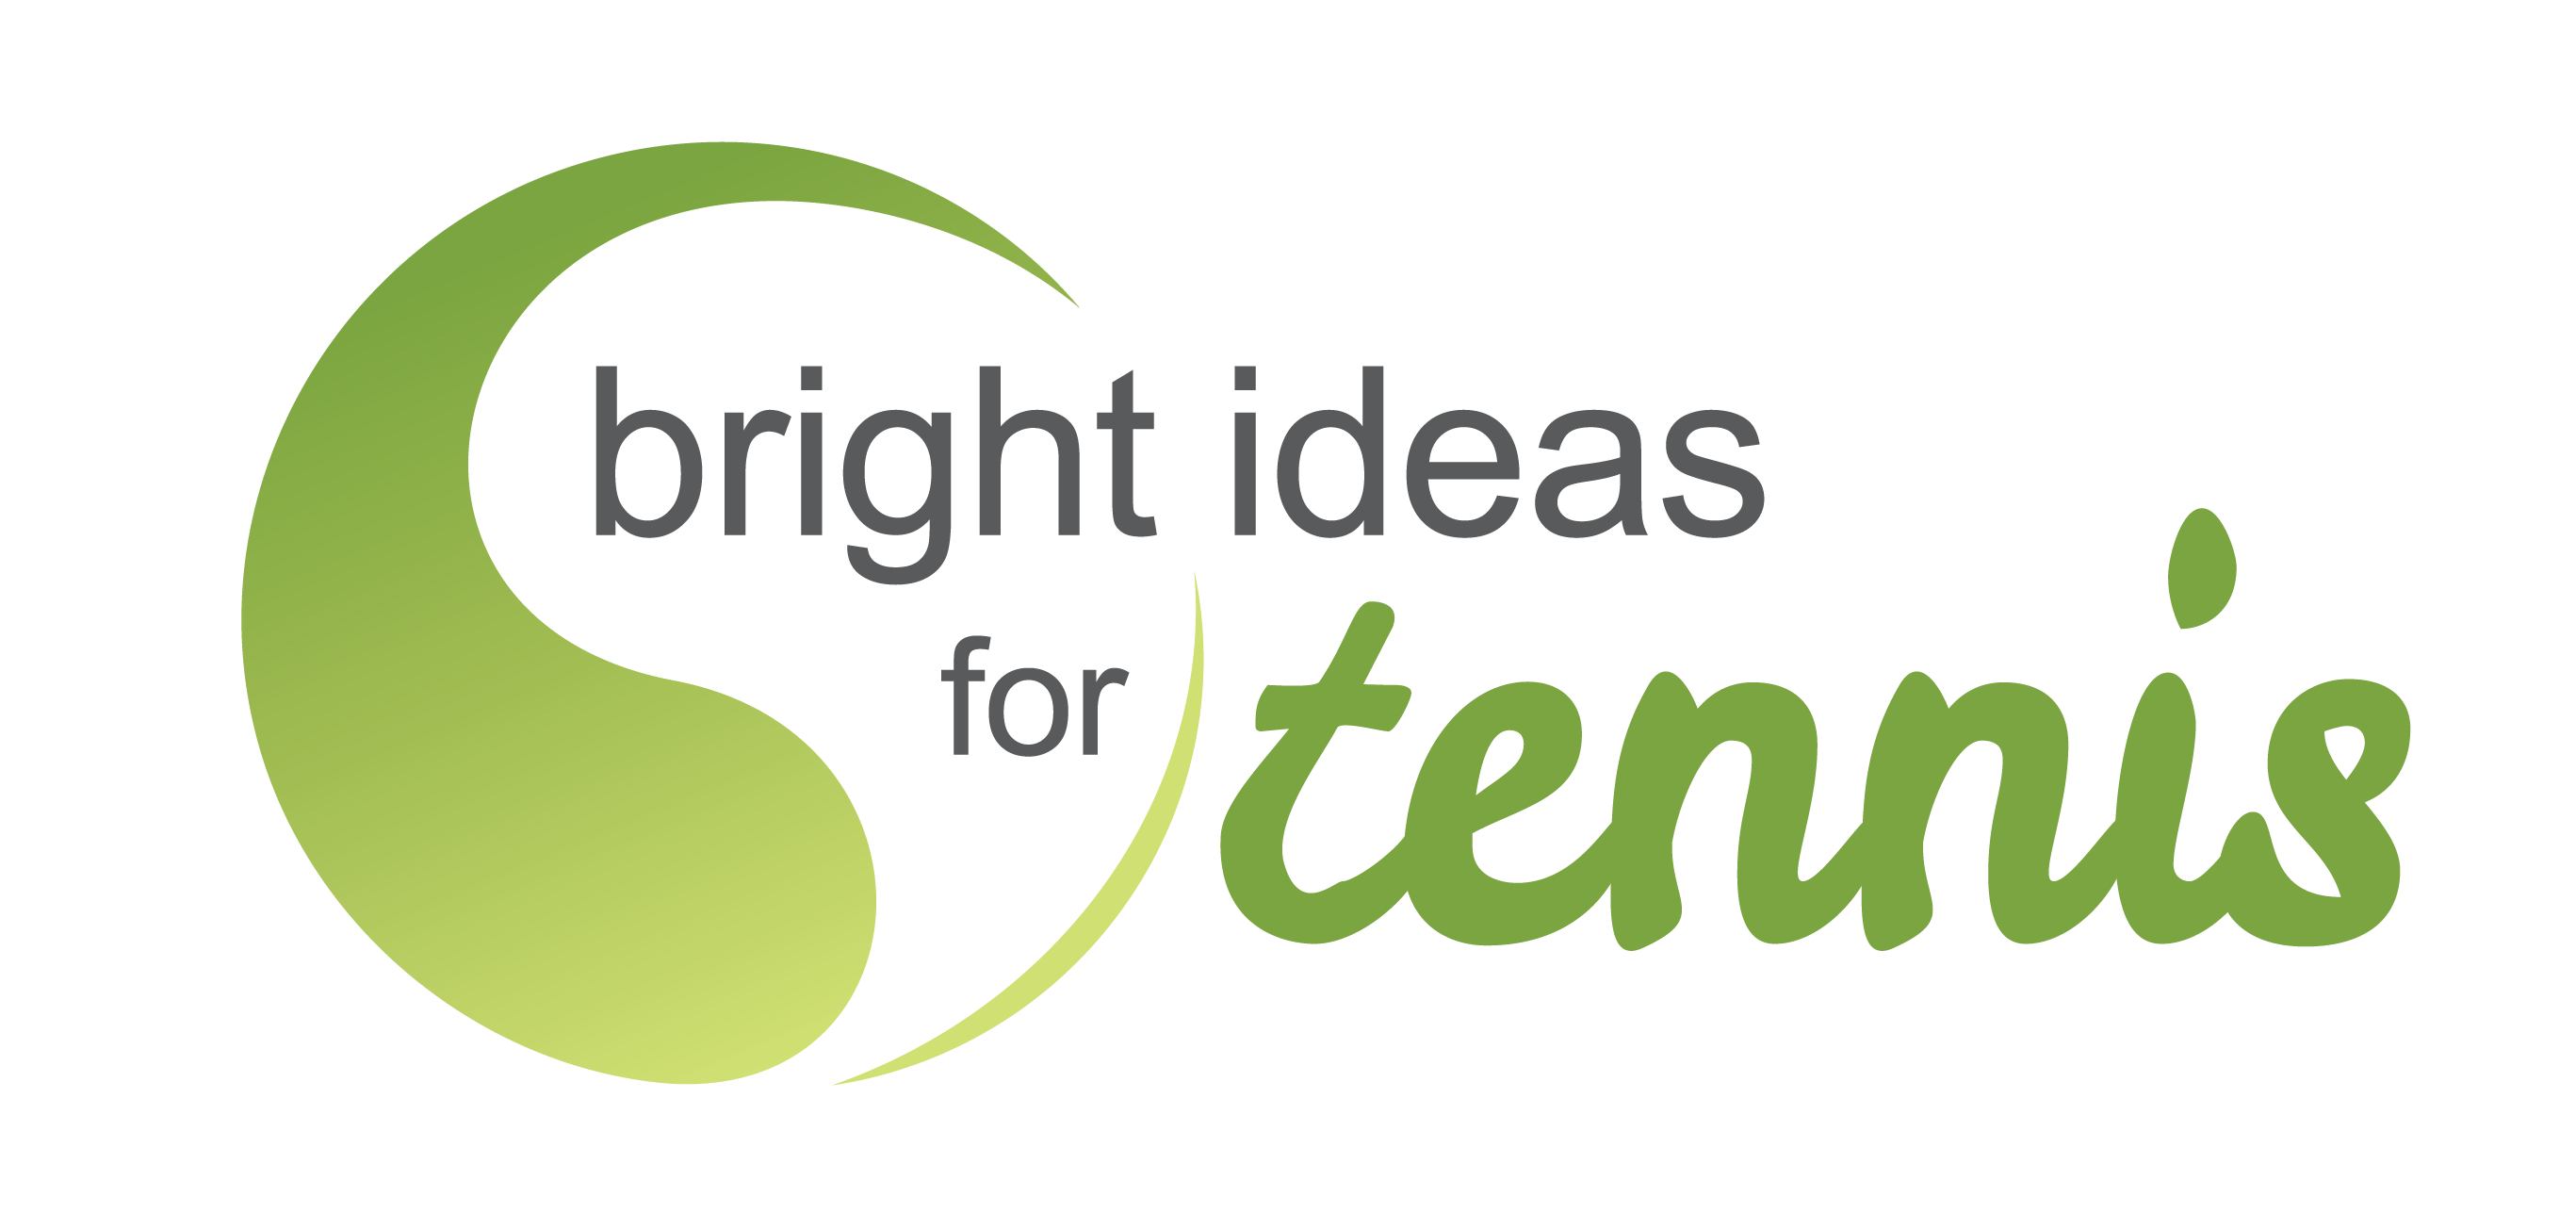 Tennis Logo - Bright Ideas for Tennis | Tennis Charity | Resources